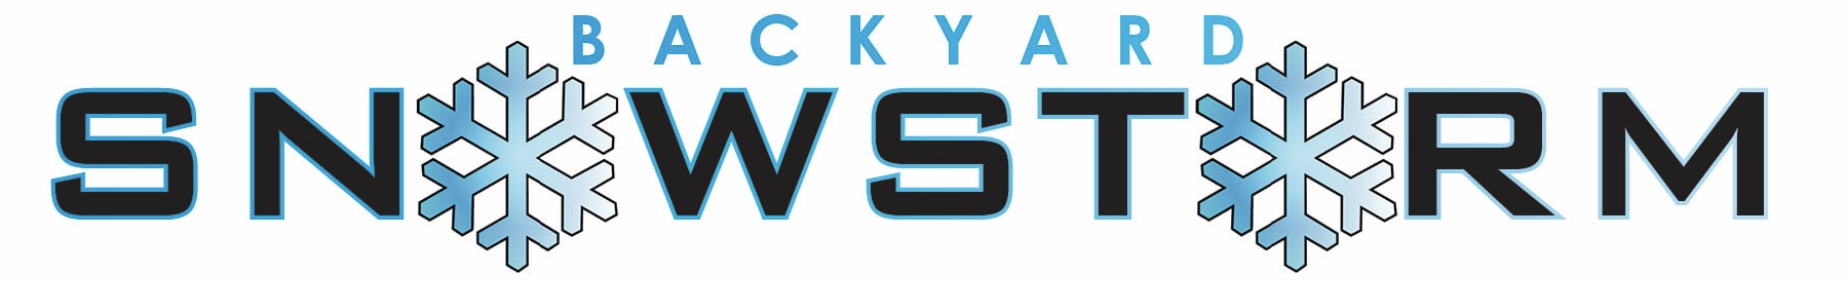 BYSS black logo